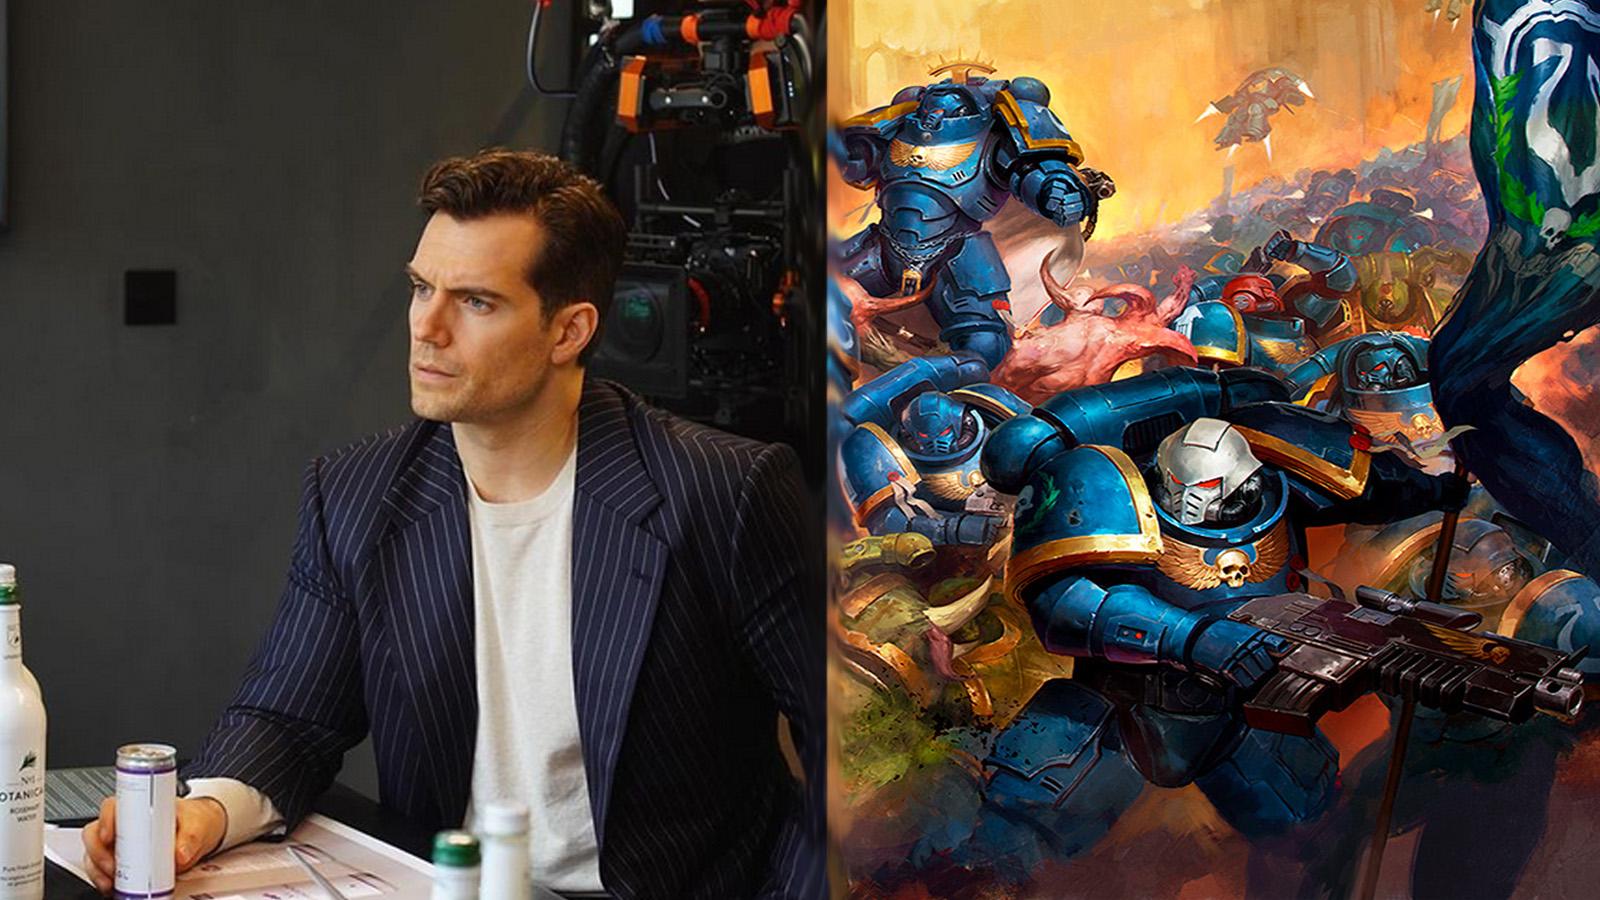 Is Henry Cavill's Superman in Shazam 2? - Dexerto